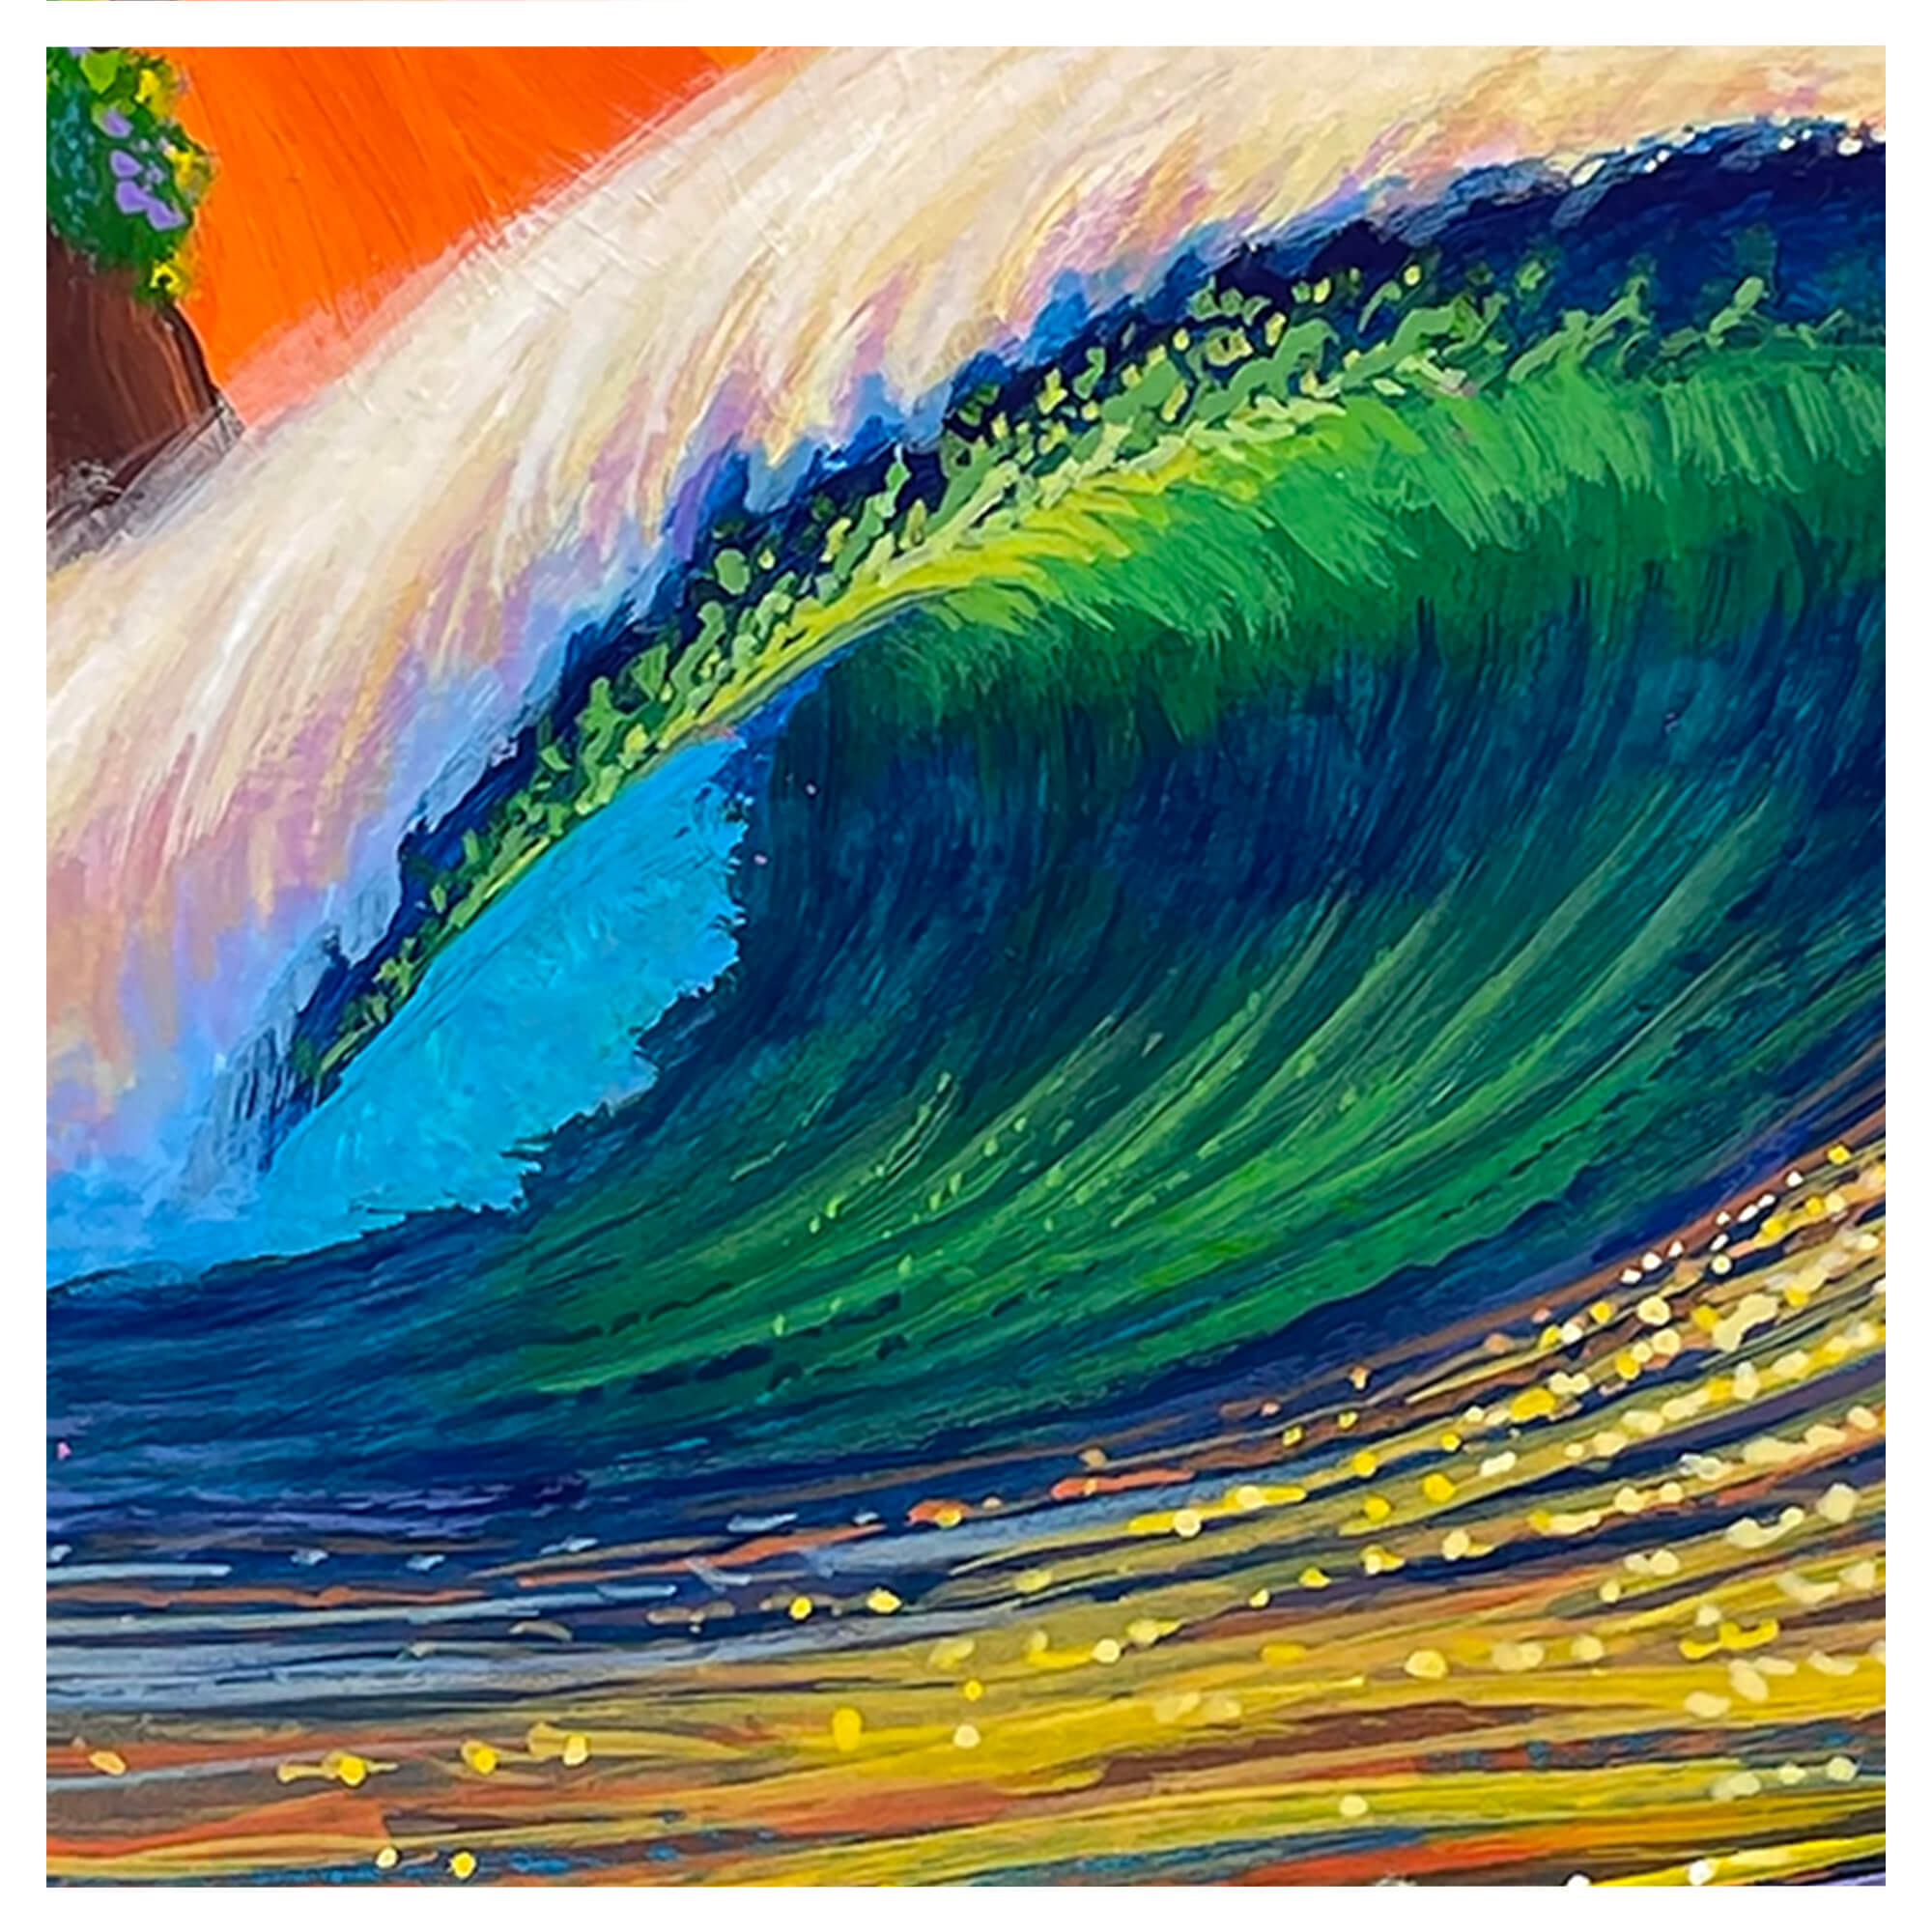 Crashing wave art by Maui artist Patrick Parker